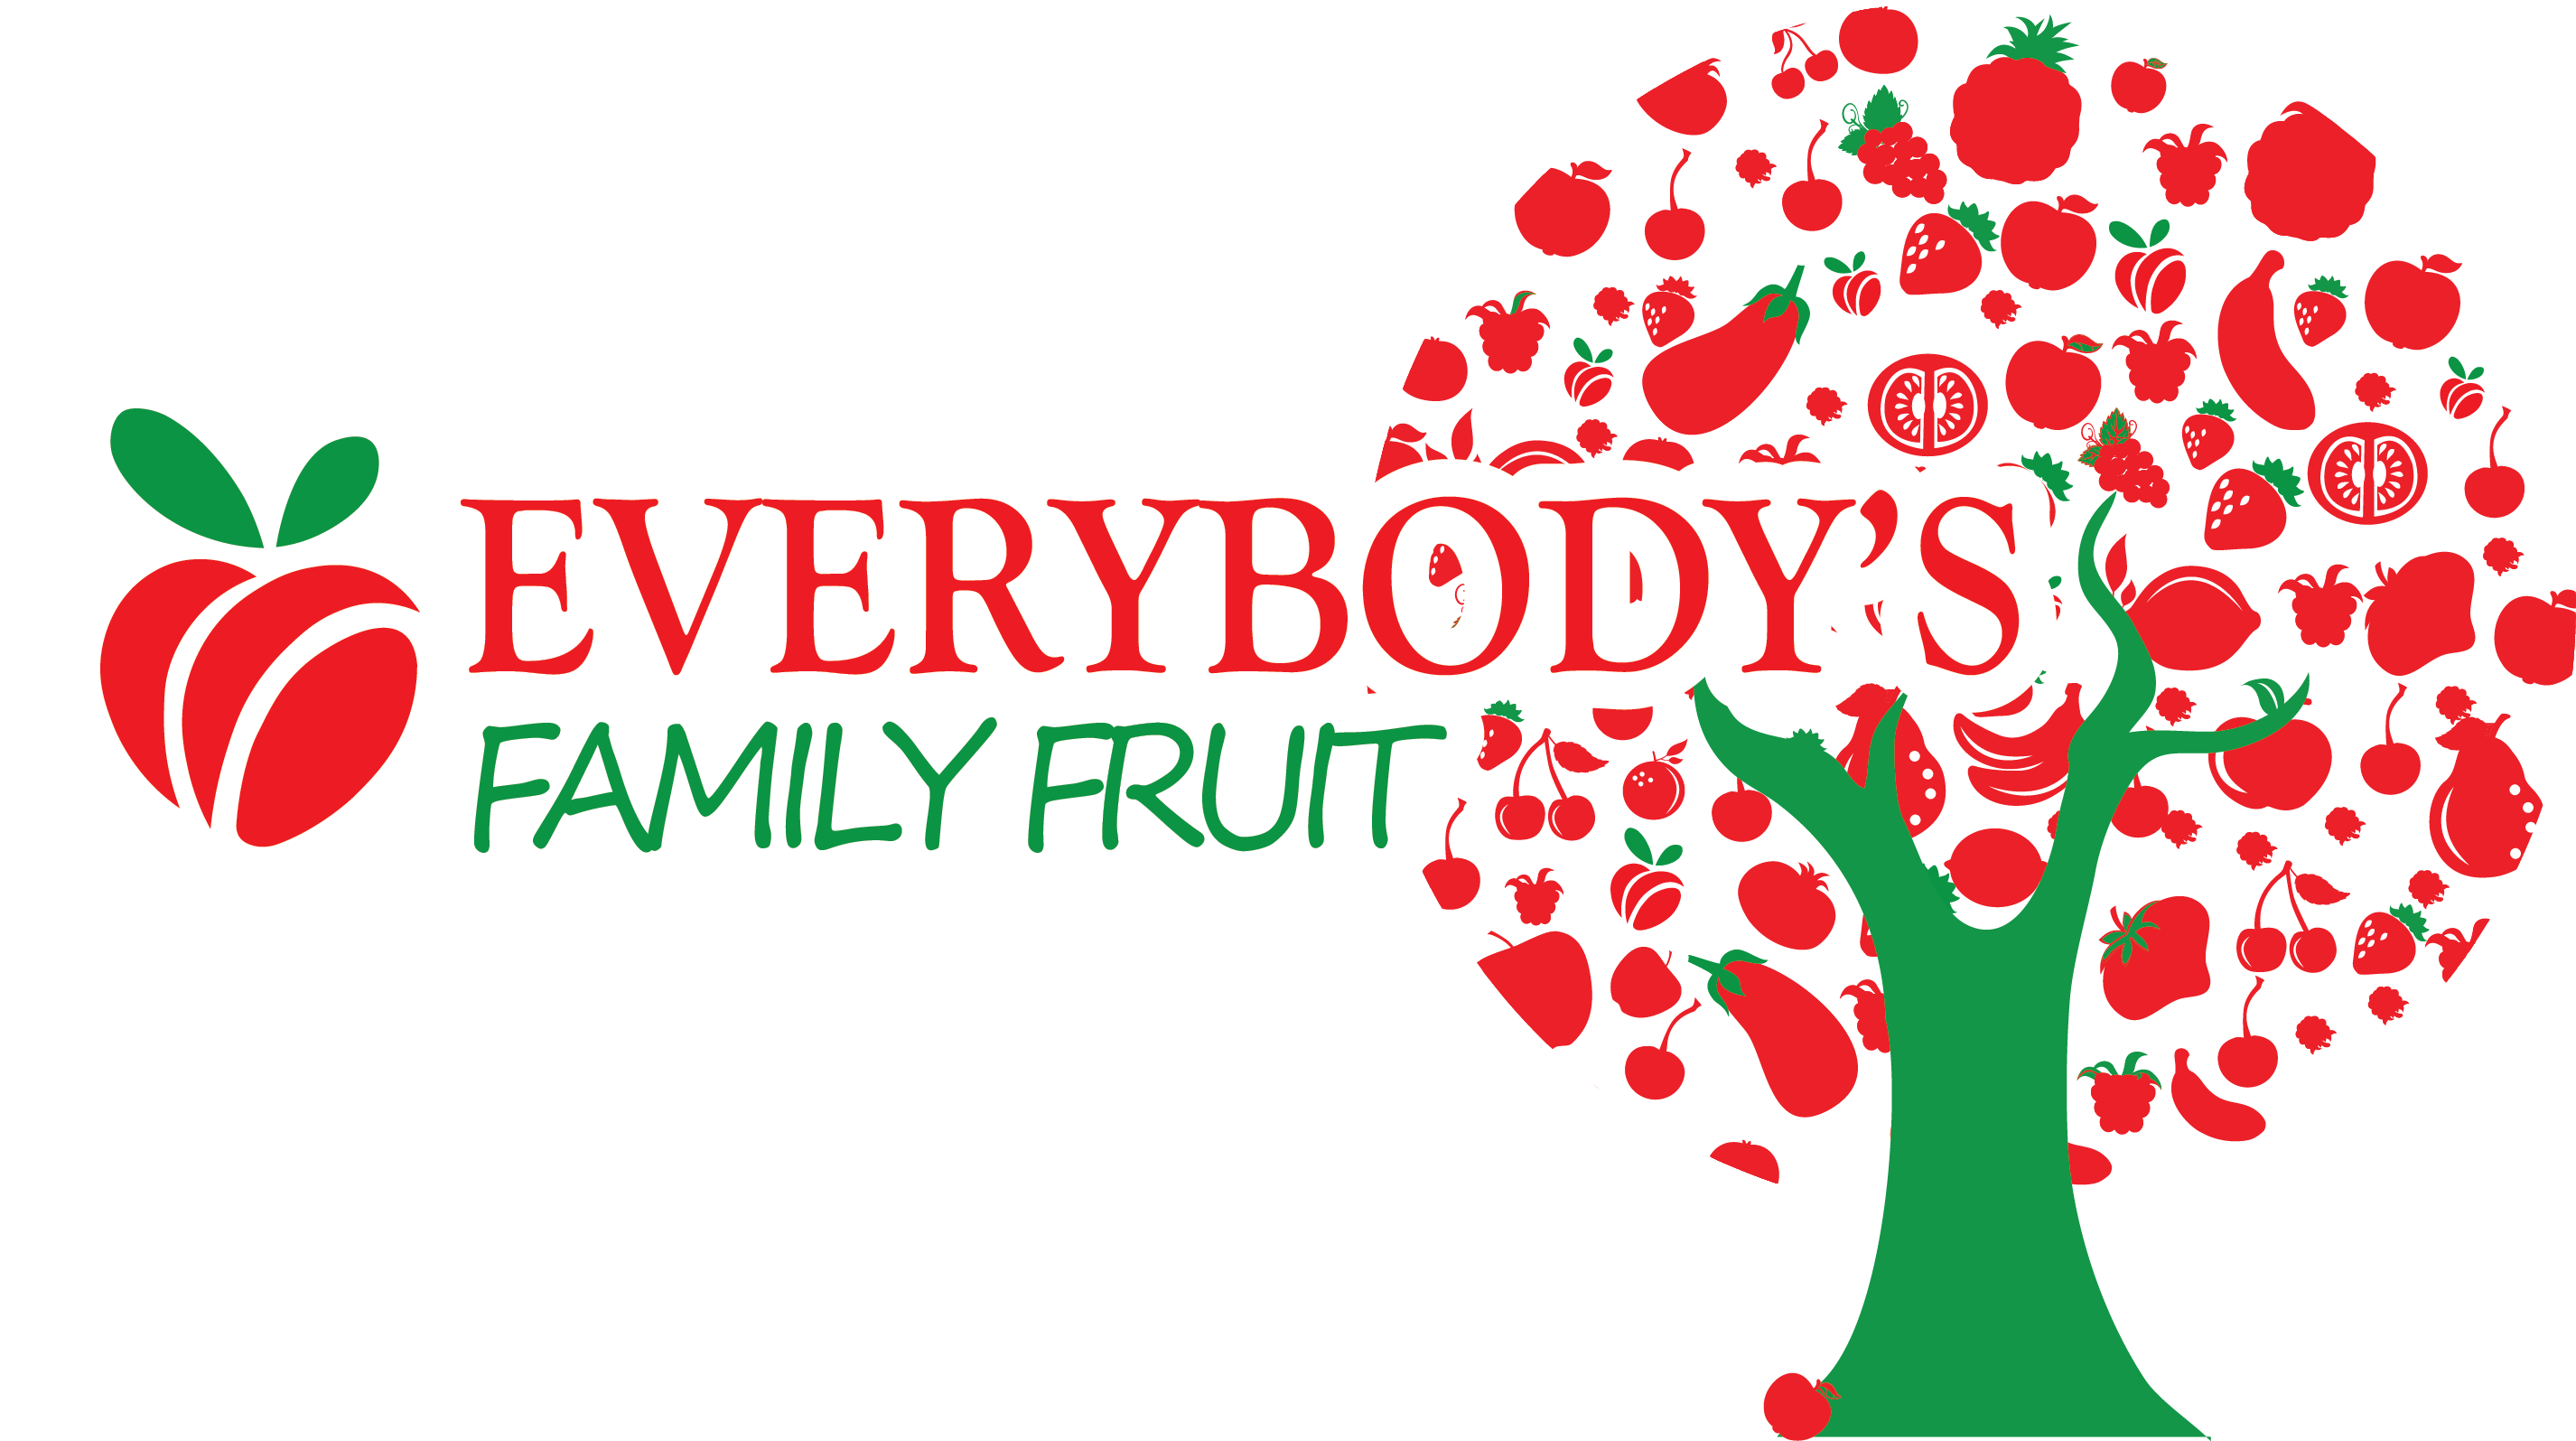 Everybody's Family Fruit